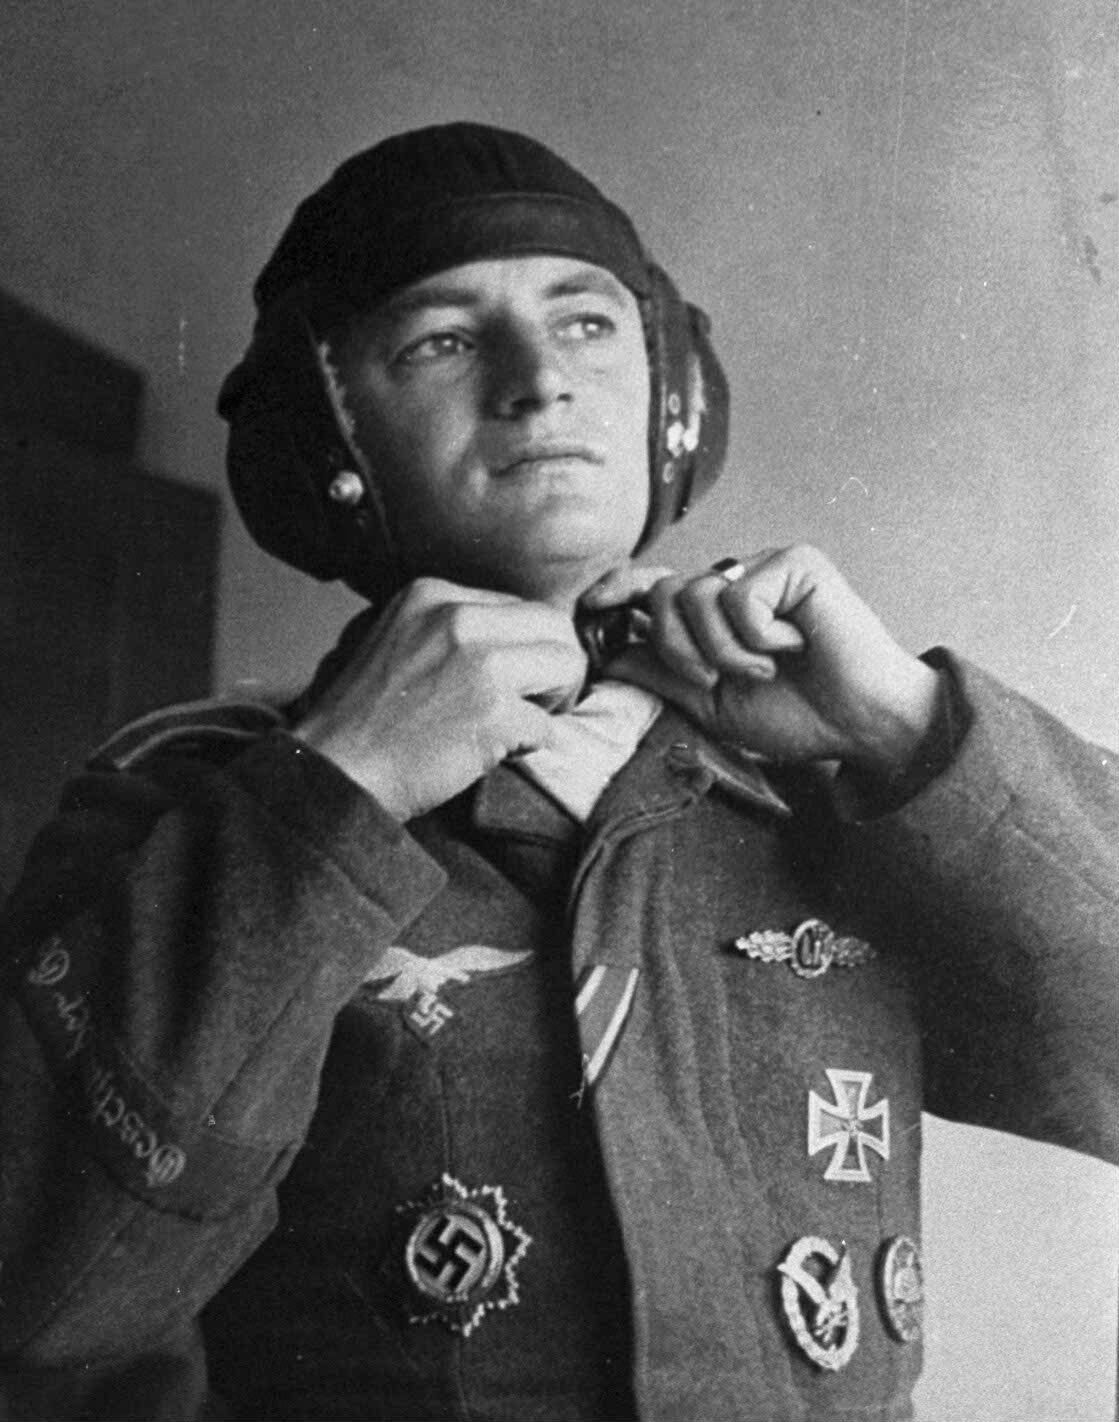 Bezrukov in the Luftwaffe - My, Bezrukov, Third Reich, Luftwaffe, Similarity, Cosplay